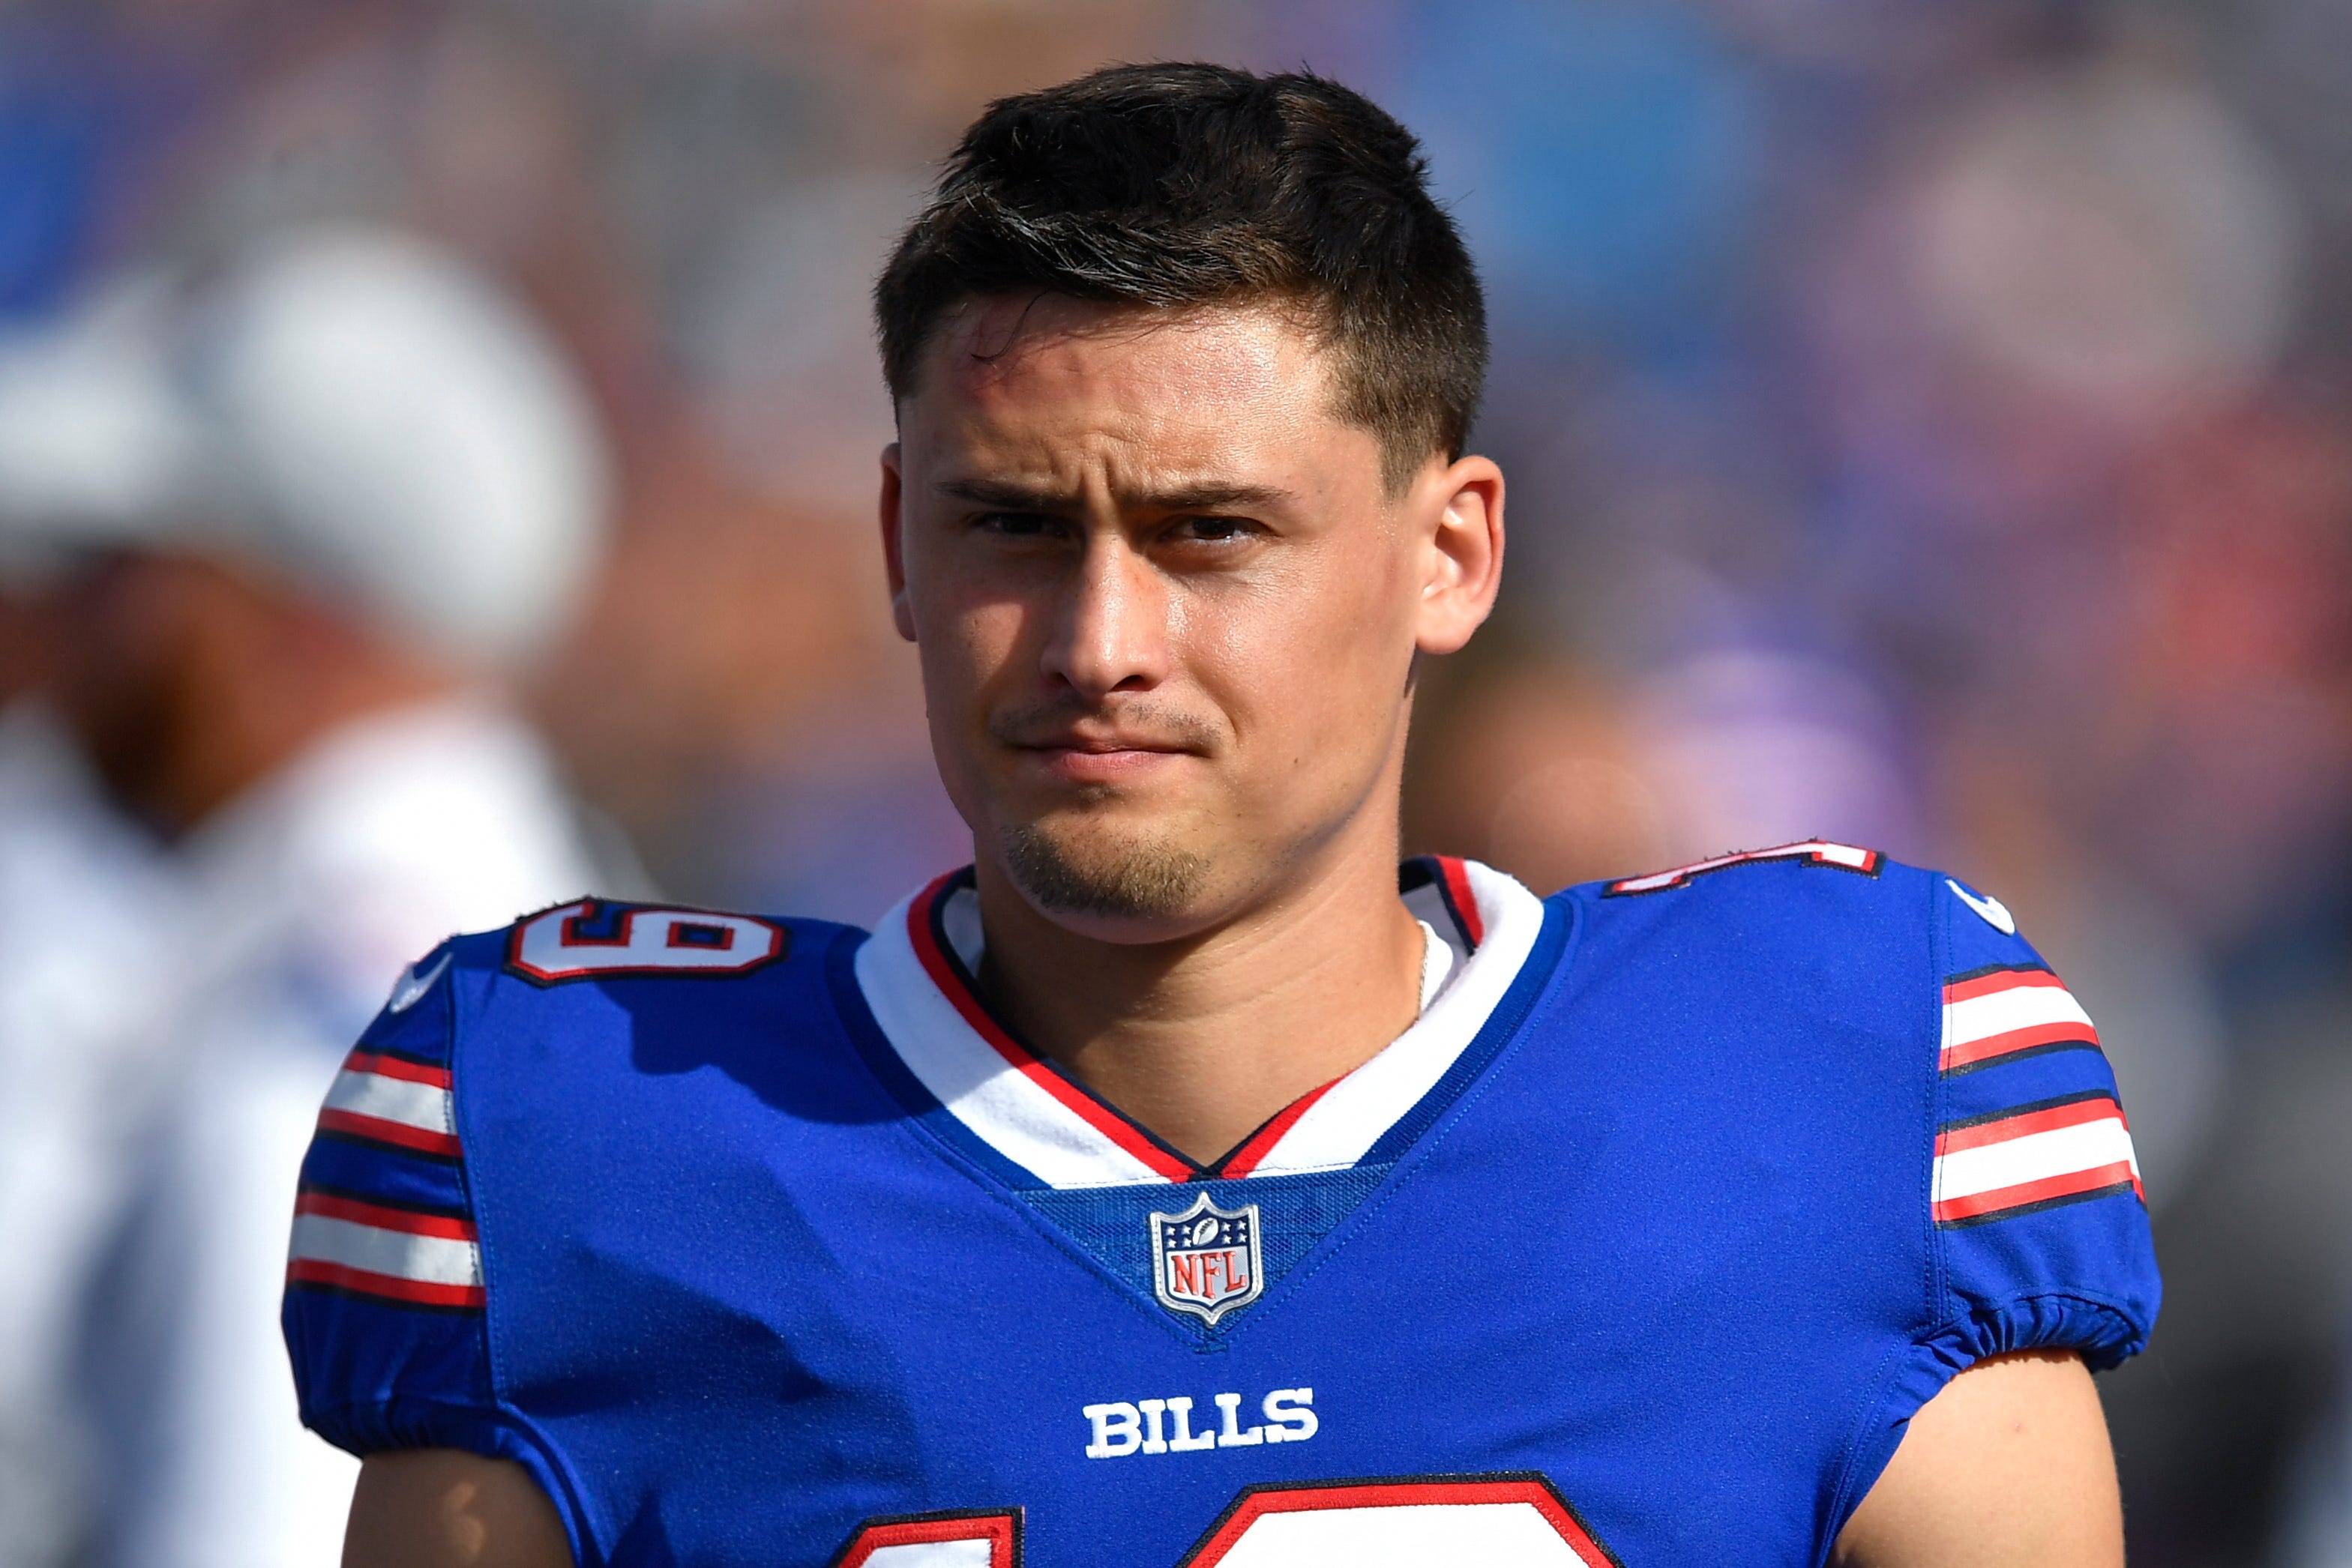 Bills release rookie punter Matt Araiza following rape accusation